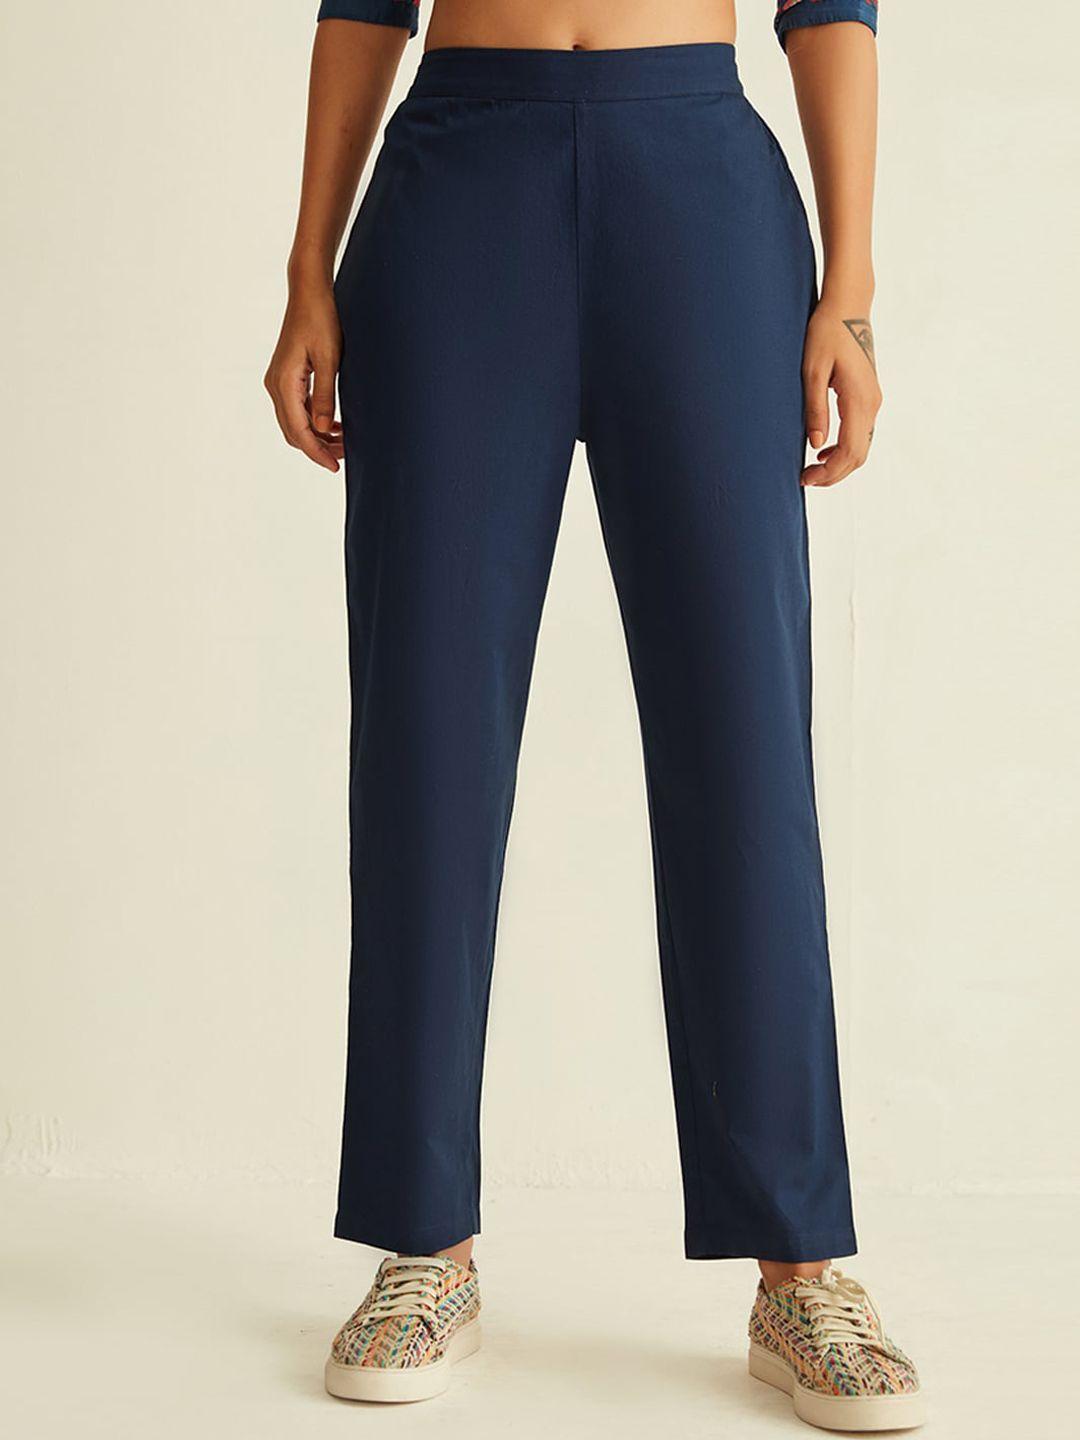 ancestry women navy blue slim fit trousers